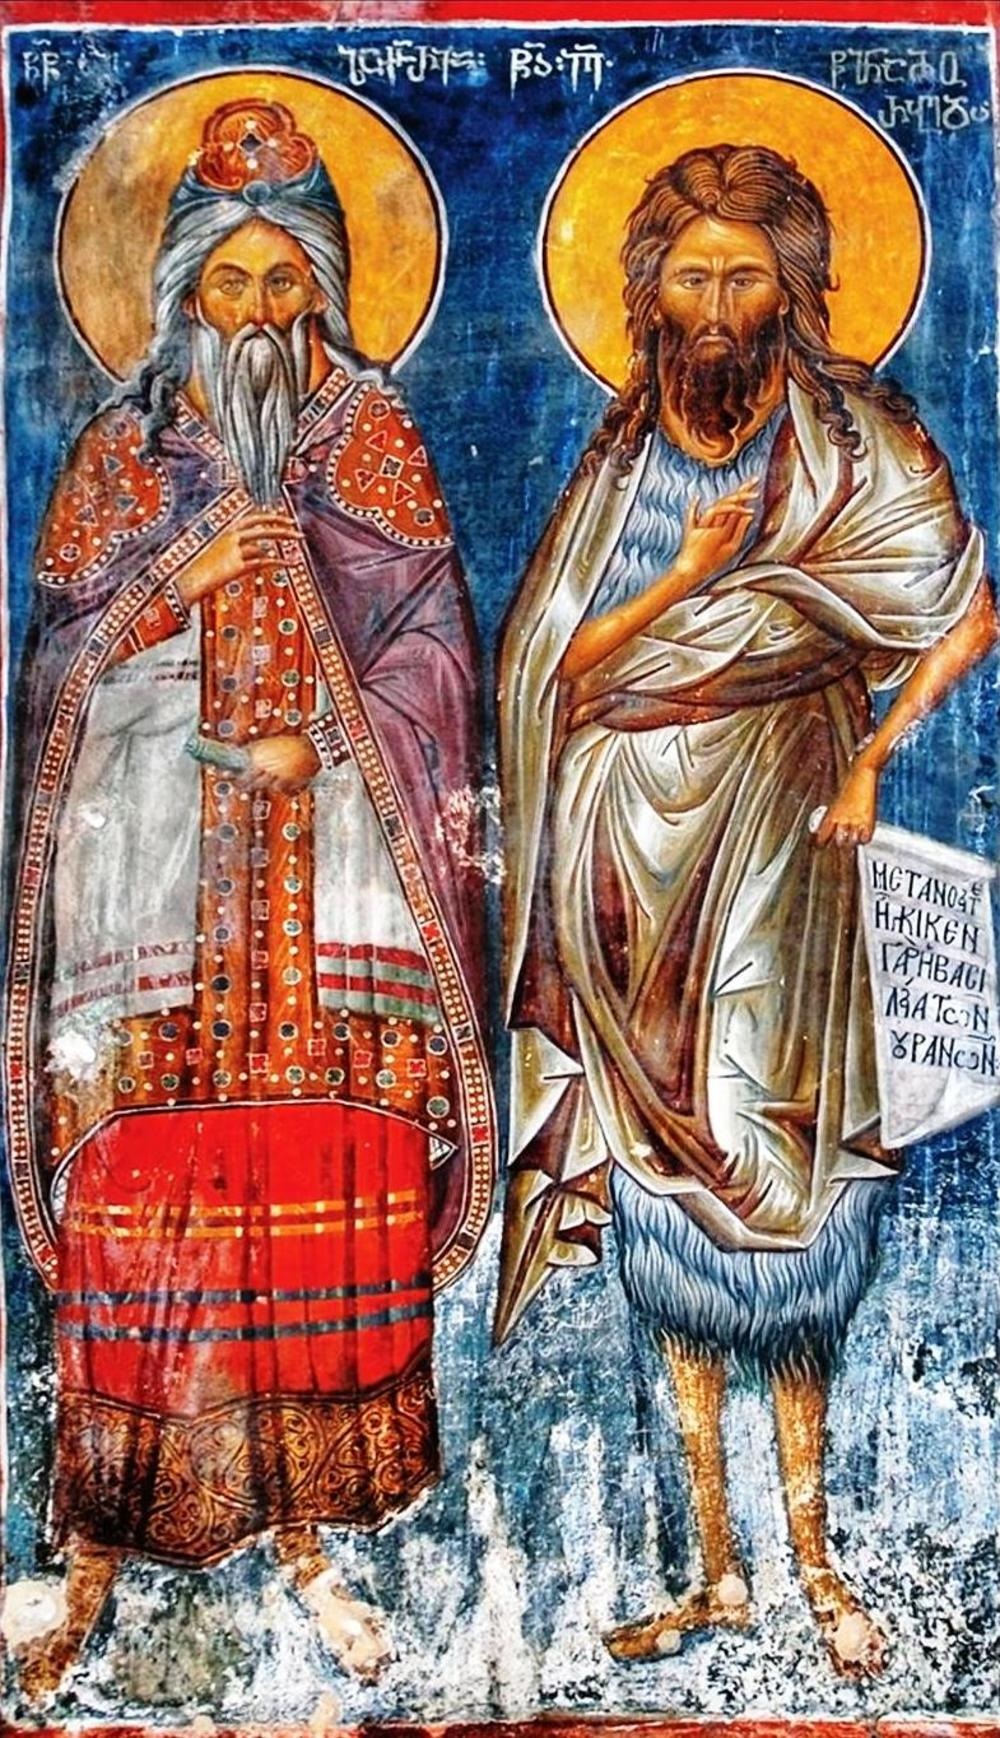 The Prophet Zacharias and St. John the Baptist